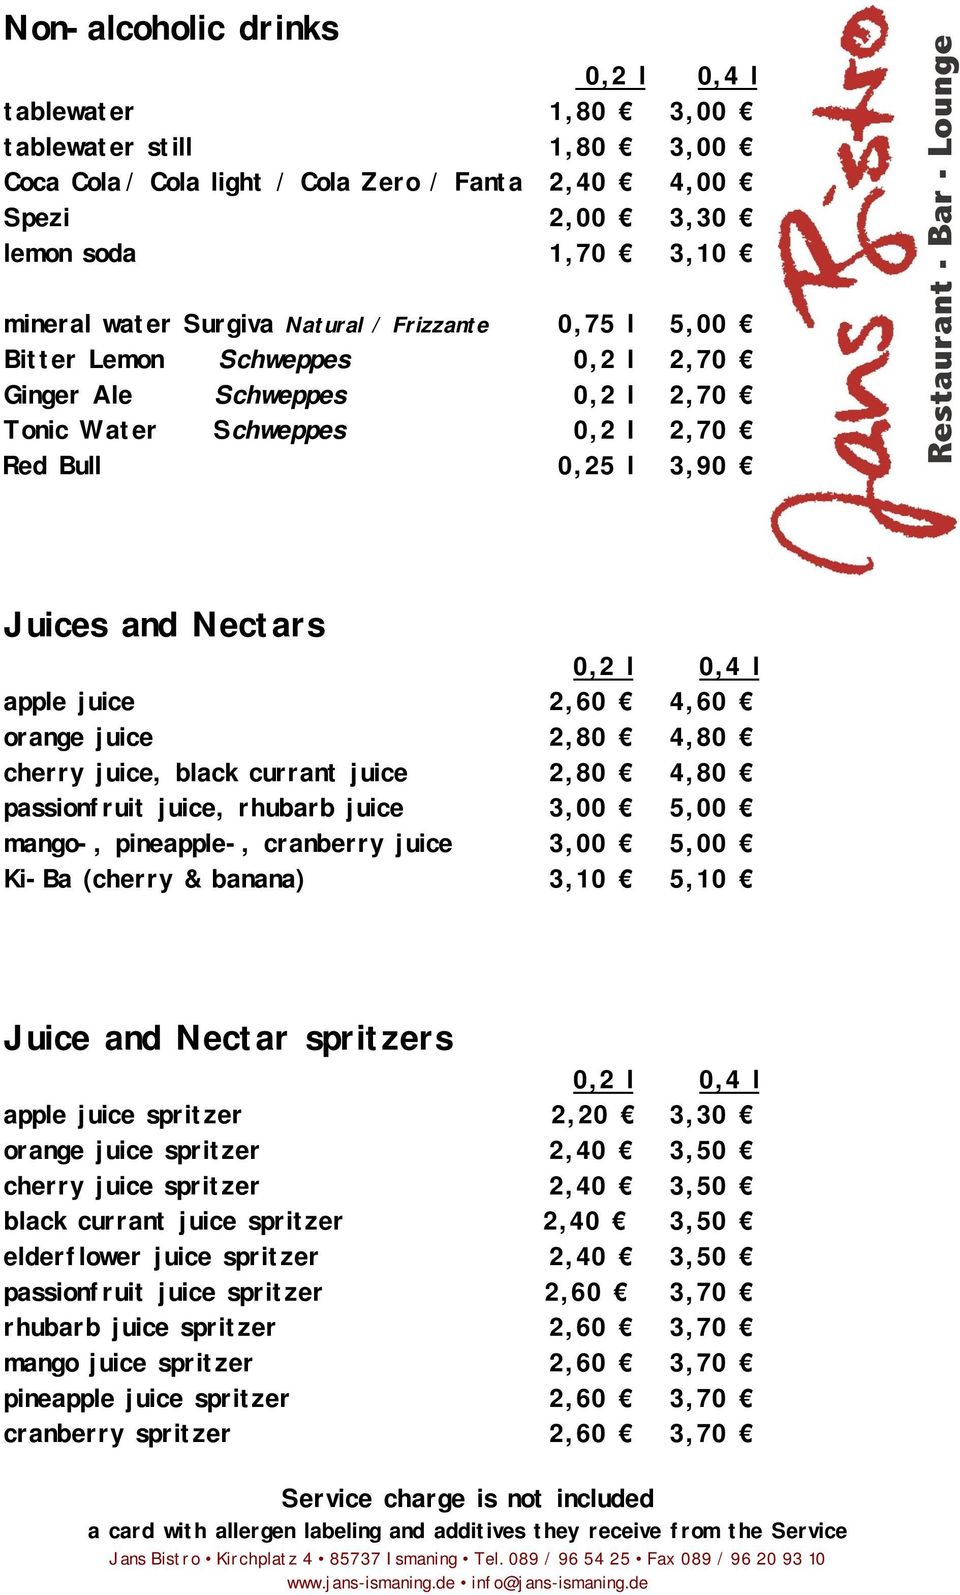 4,60 orange juice 2,80 4,80 cherry juice, black currant juice 2,80 4,80 passionfruit juice, rhubarb juice 3,00 5,00 mango-, pineapple-, cranberry juice 3,00 5,00 Ki-Ba (cherry & banana) 3,10 5,10